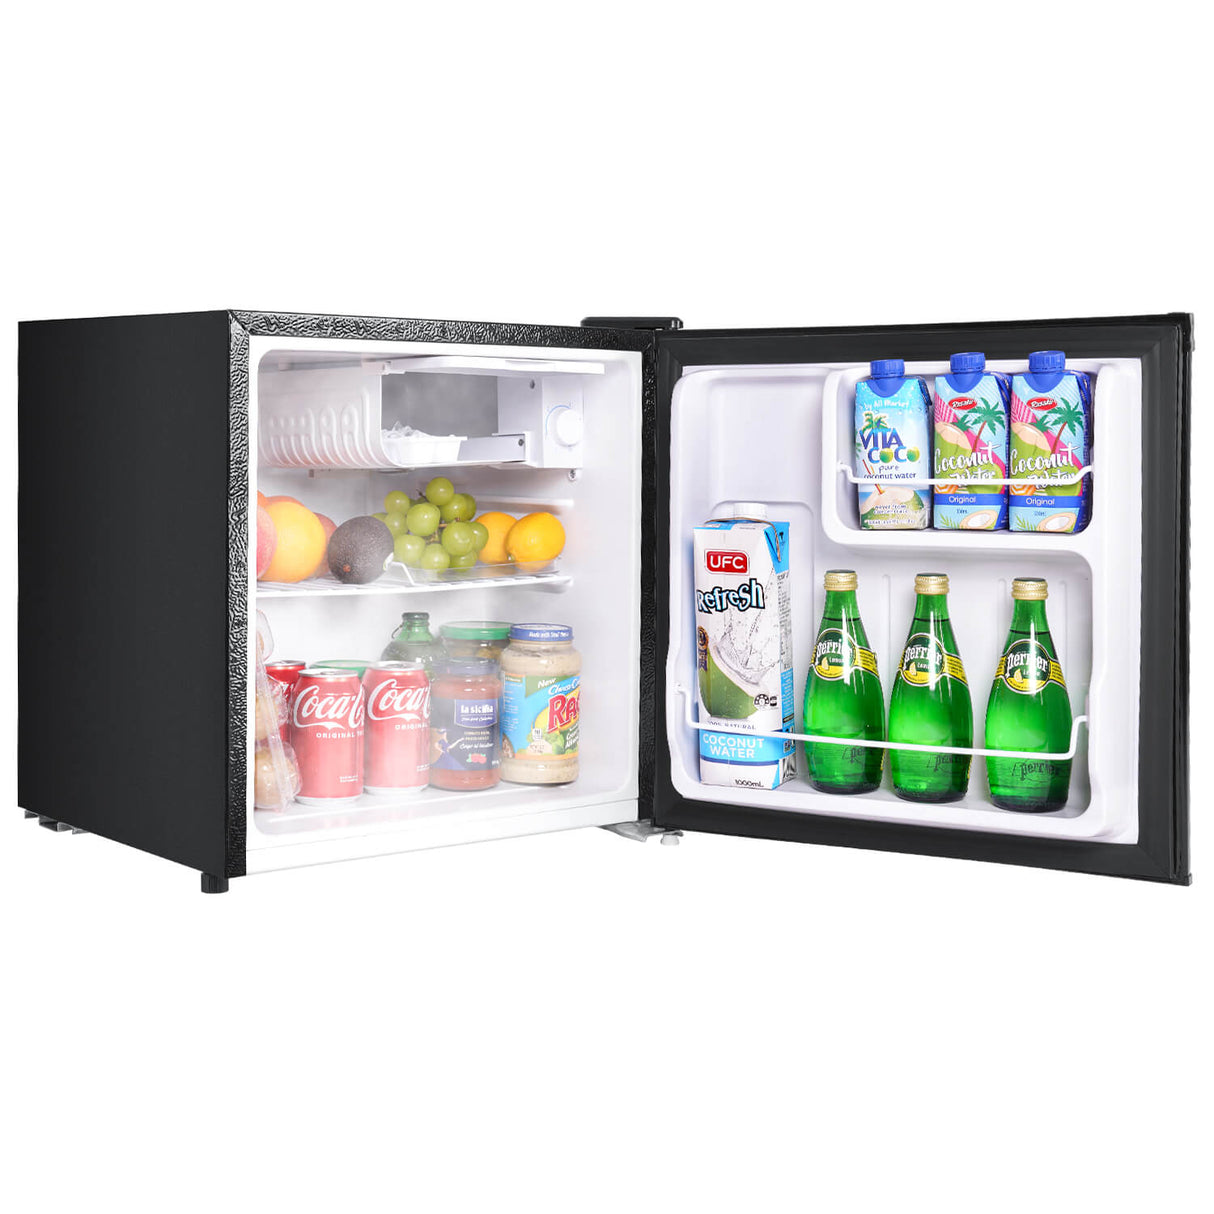 Galanz - 1.7 cubic foot compact dorm refrigerator, Black